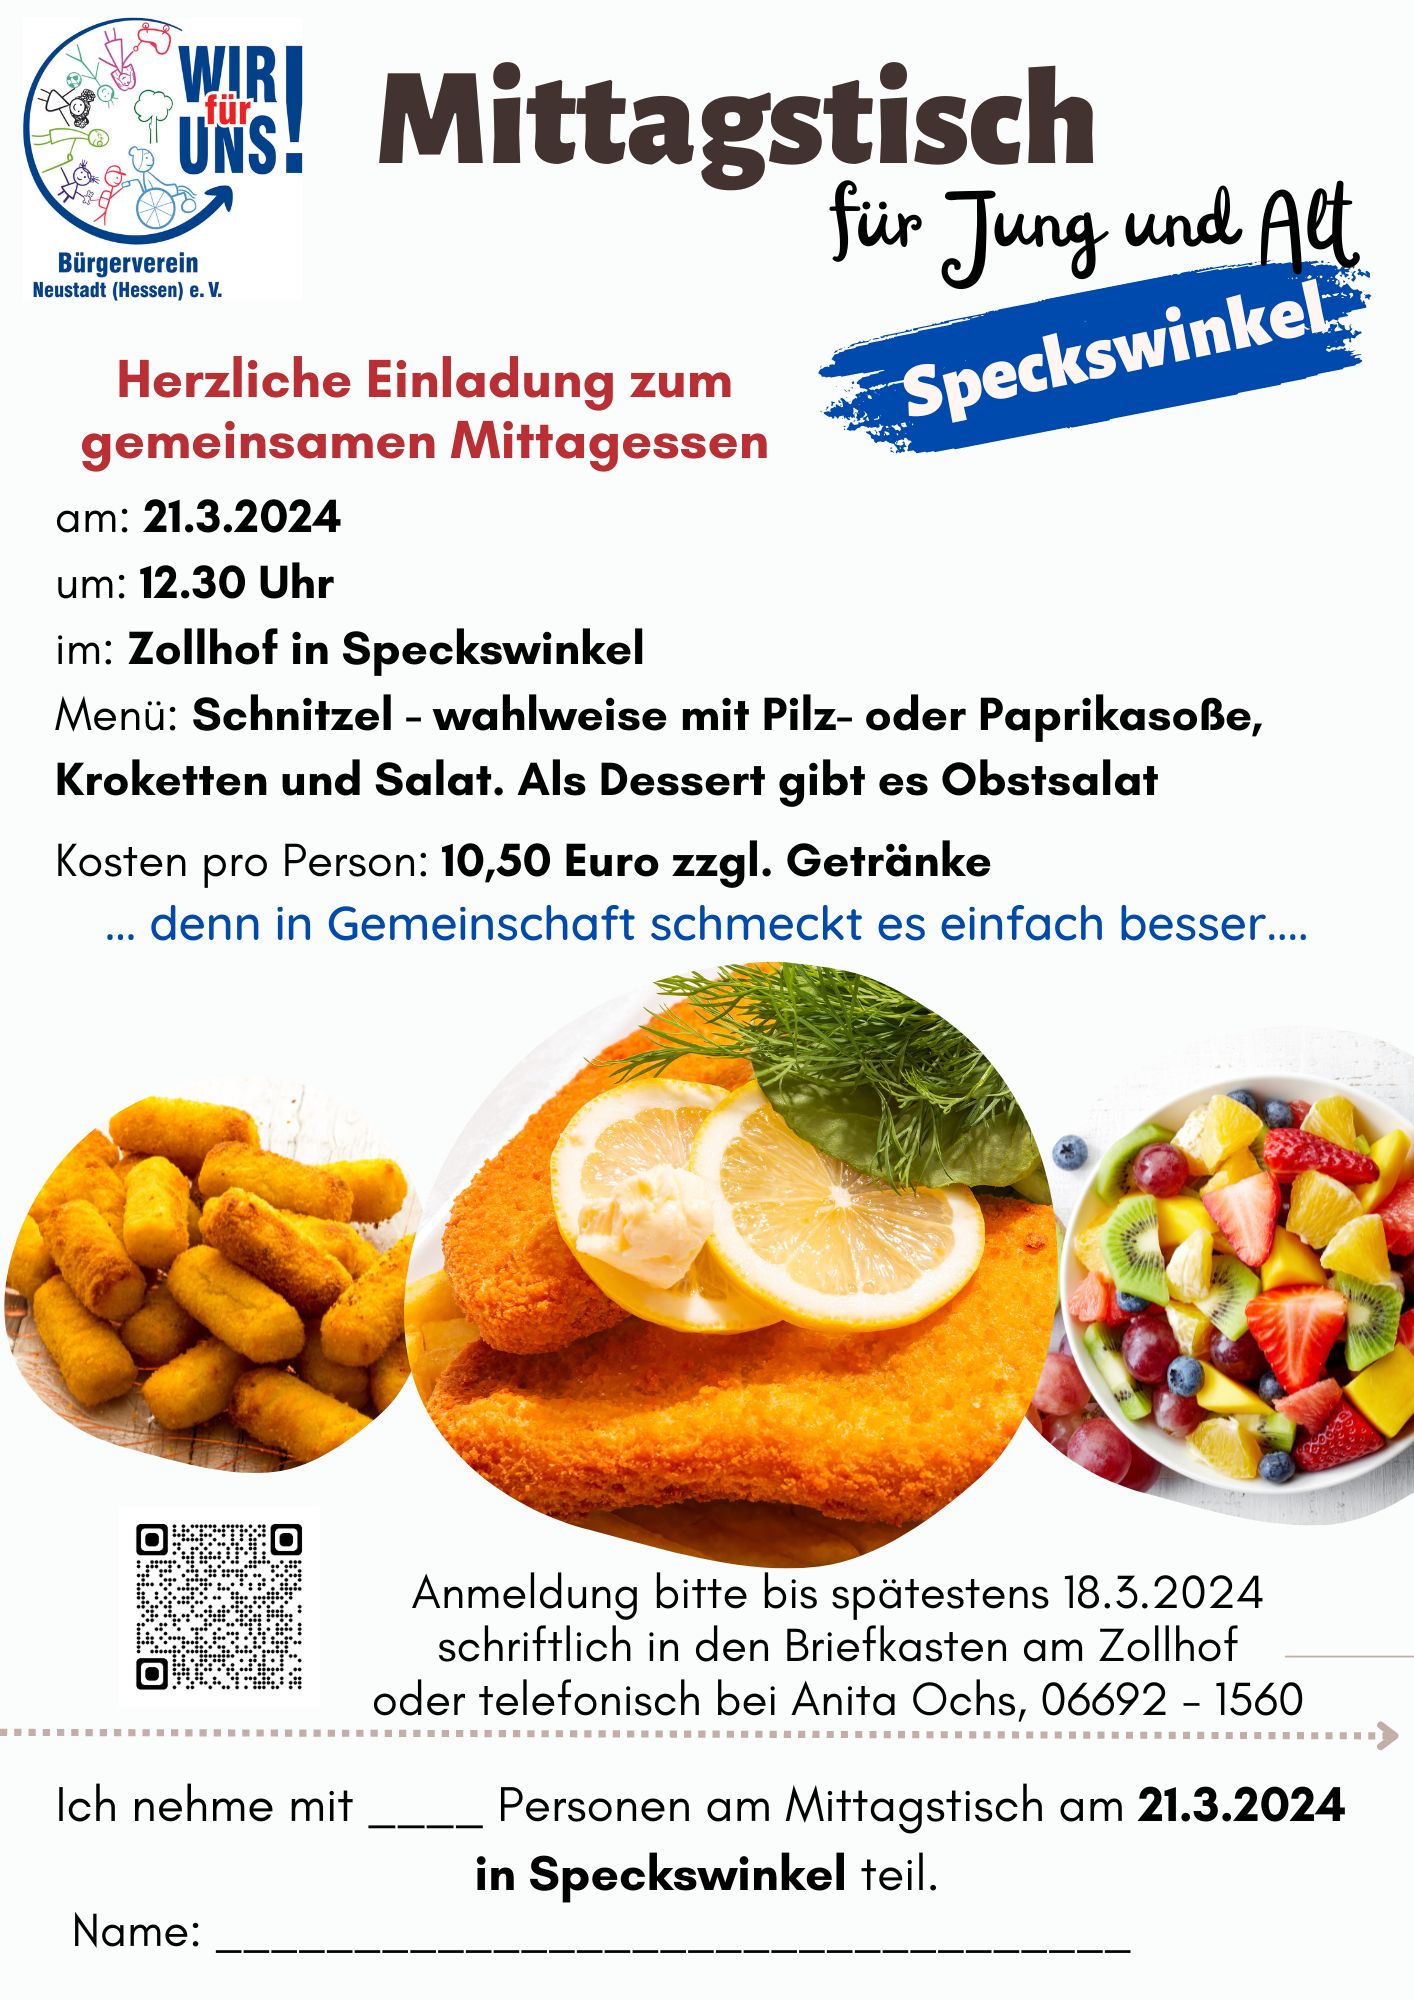 You are currently viewing Mittagstisch in Speckswinkel am 21.3.2024